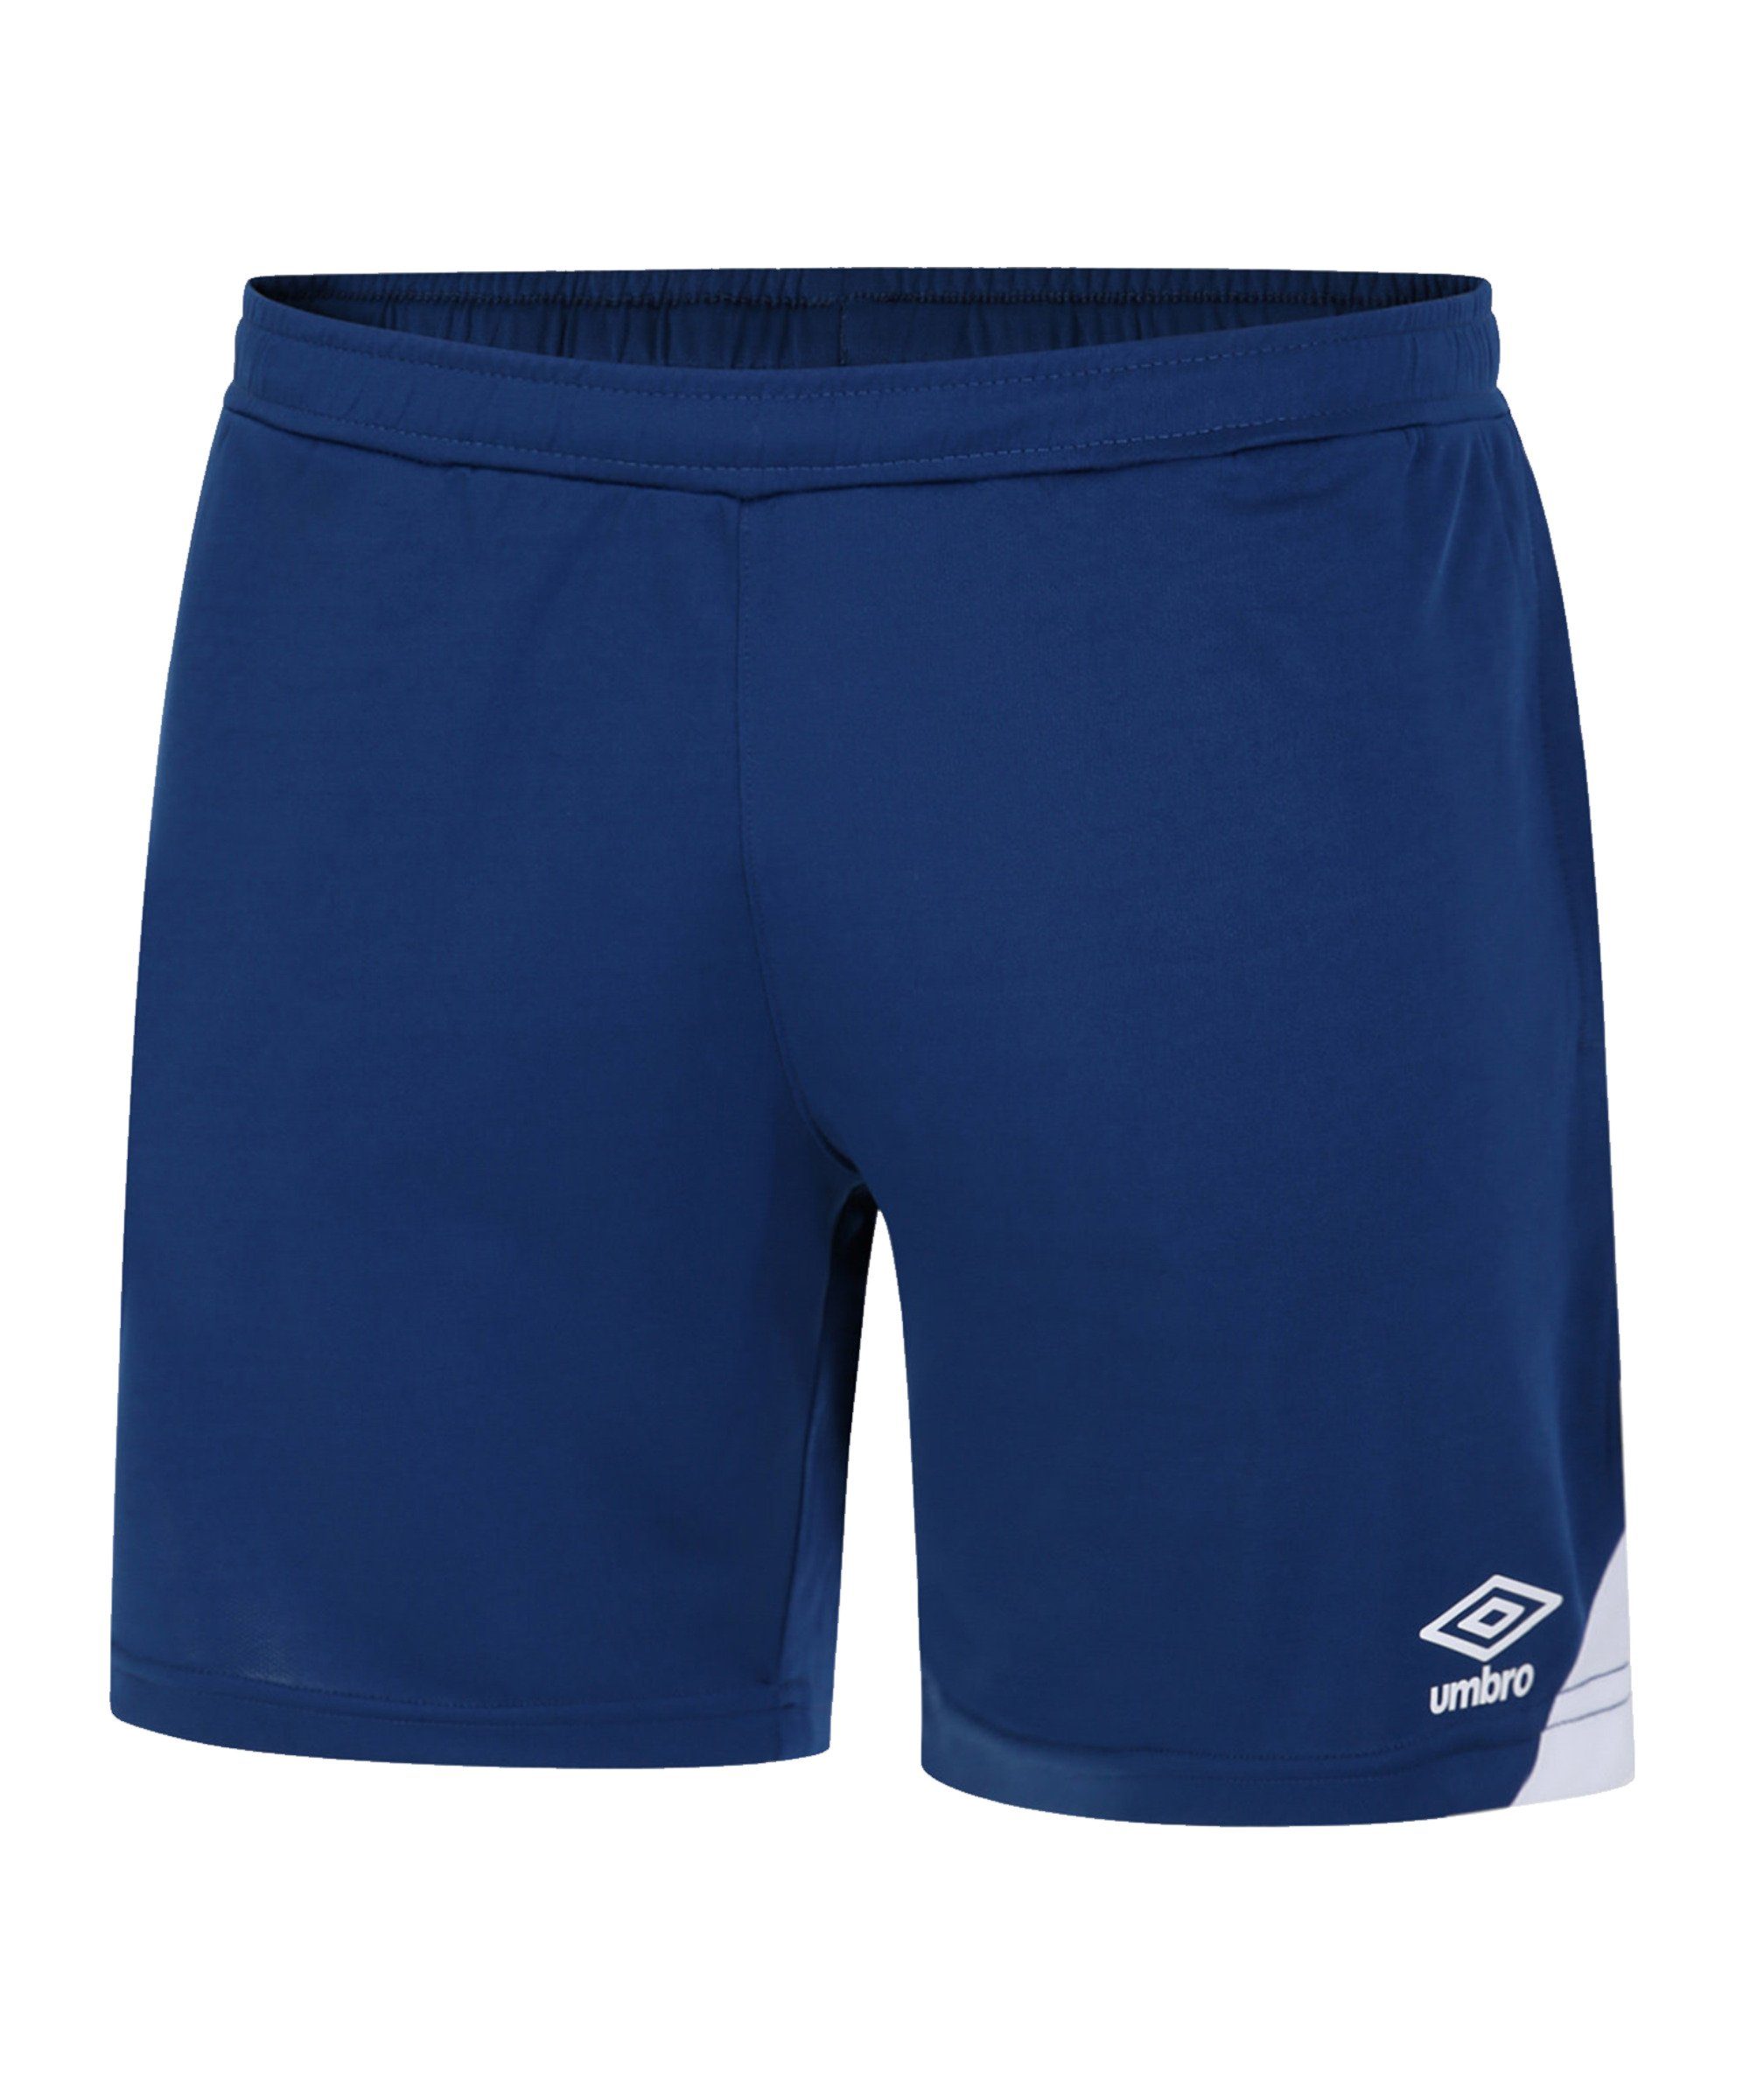 Umbro Sporthose Total Training Short blauweiss